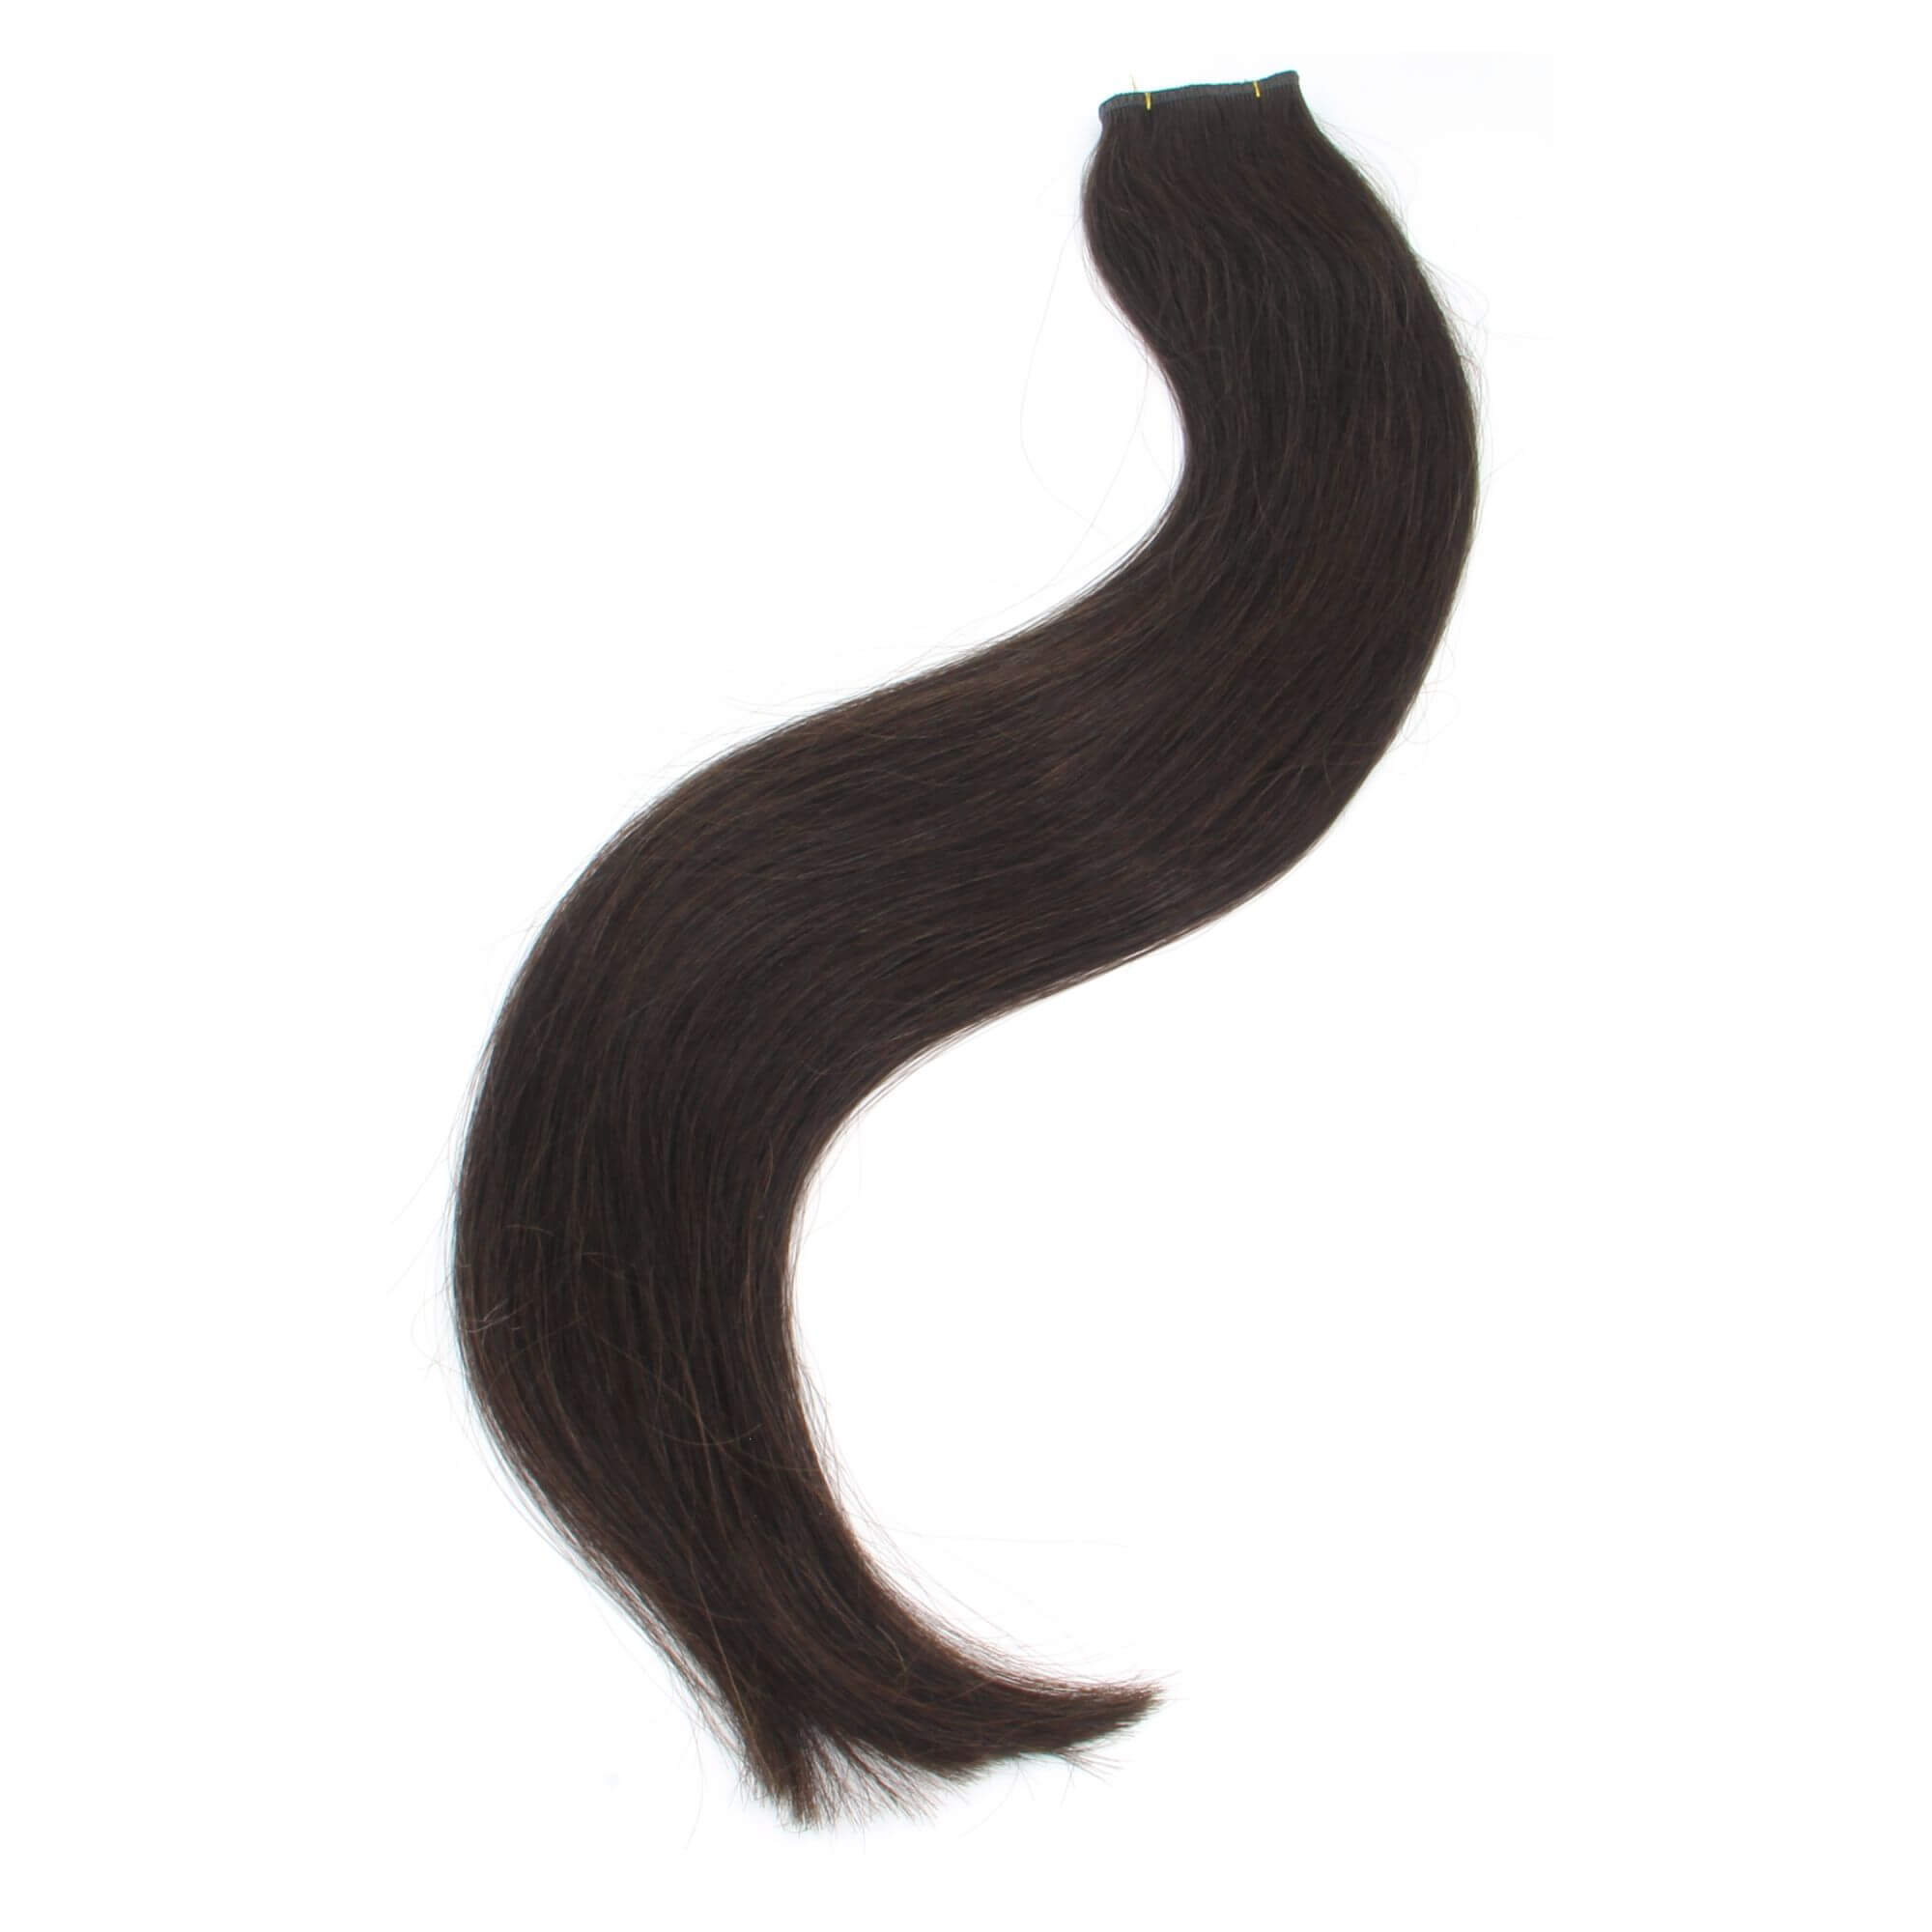 Haarweaves kopen van Koop weaves van Chiq Human Hair